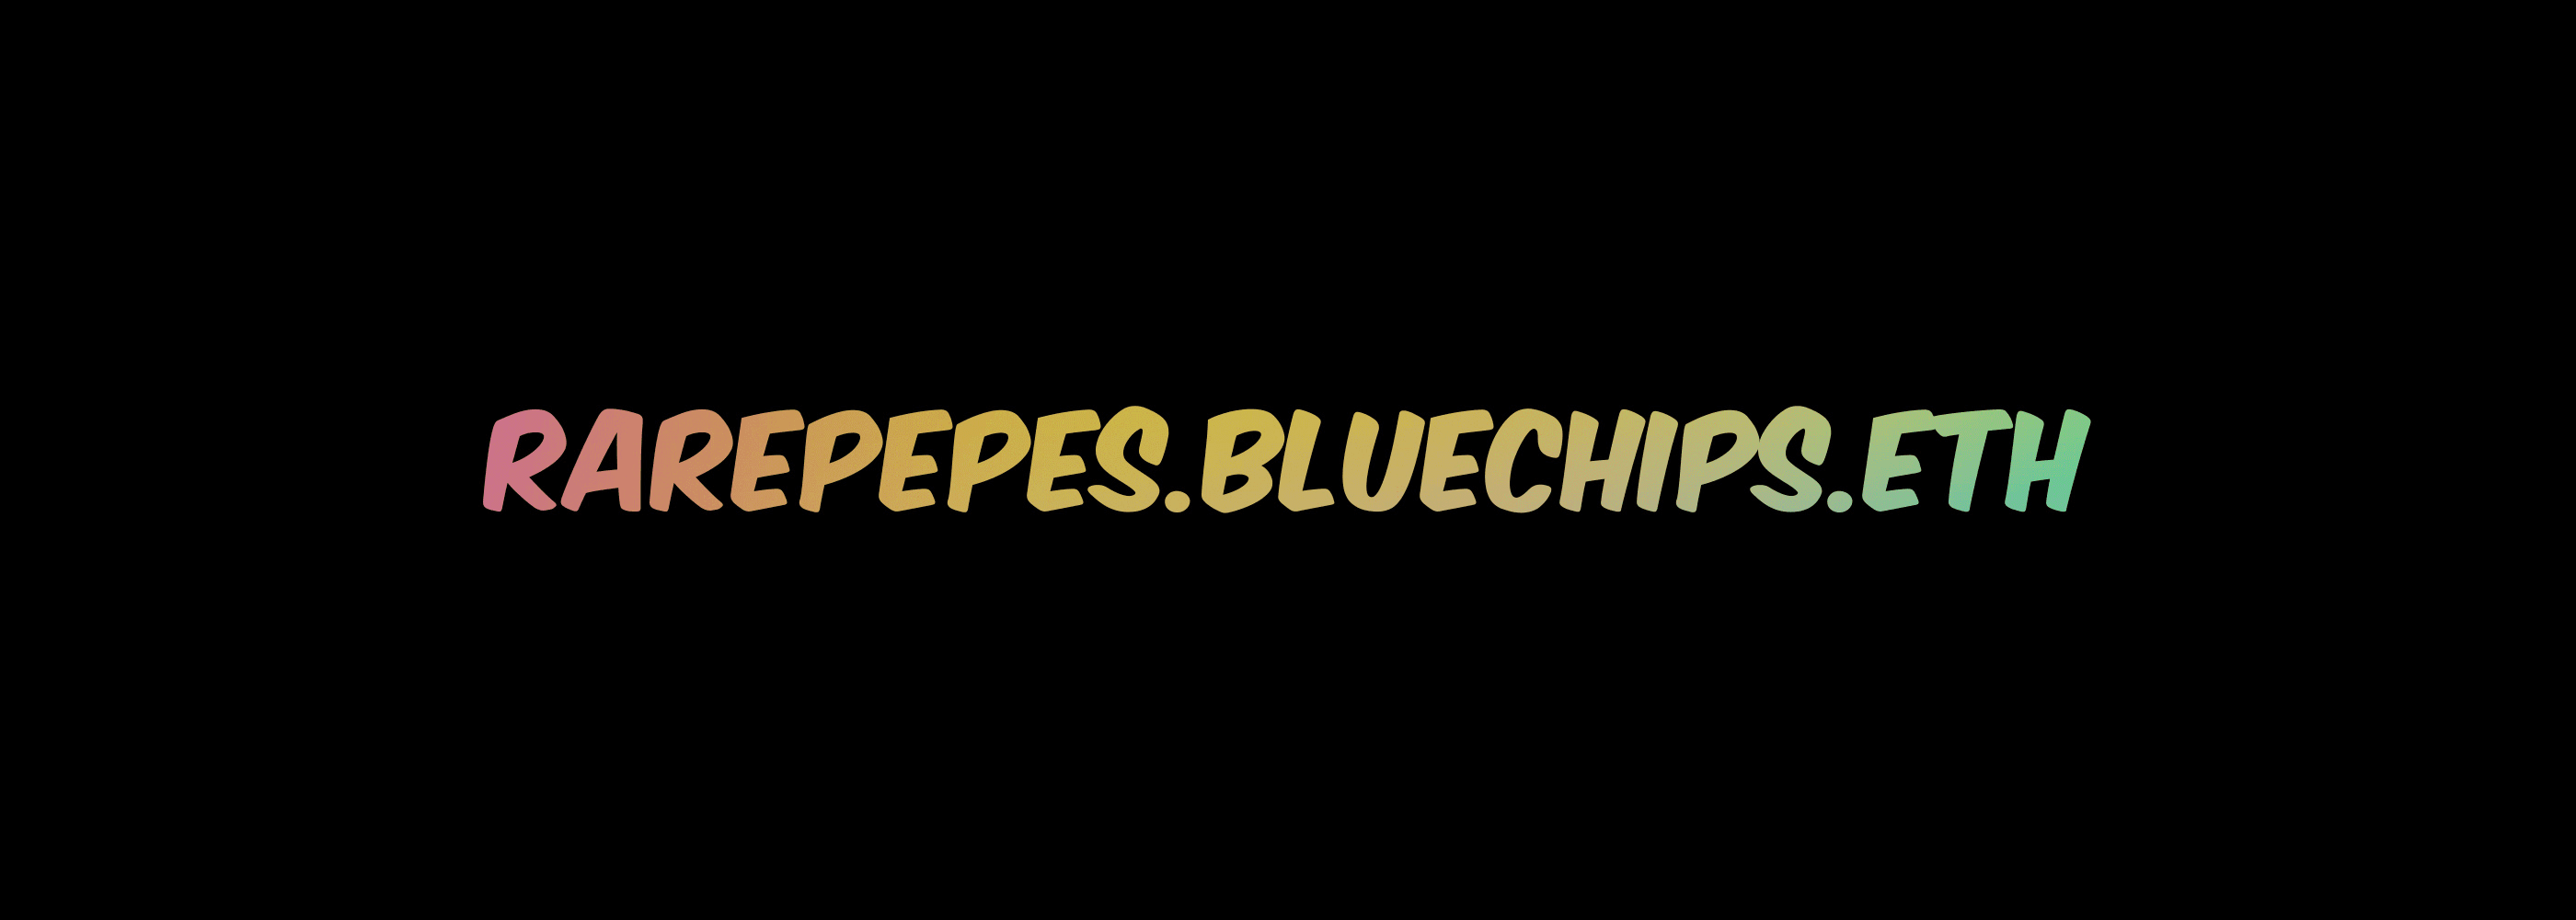 rarepepes.bluechips.eth bannière